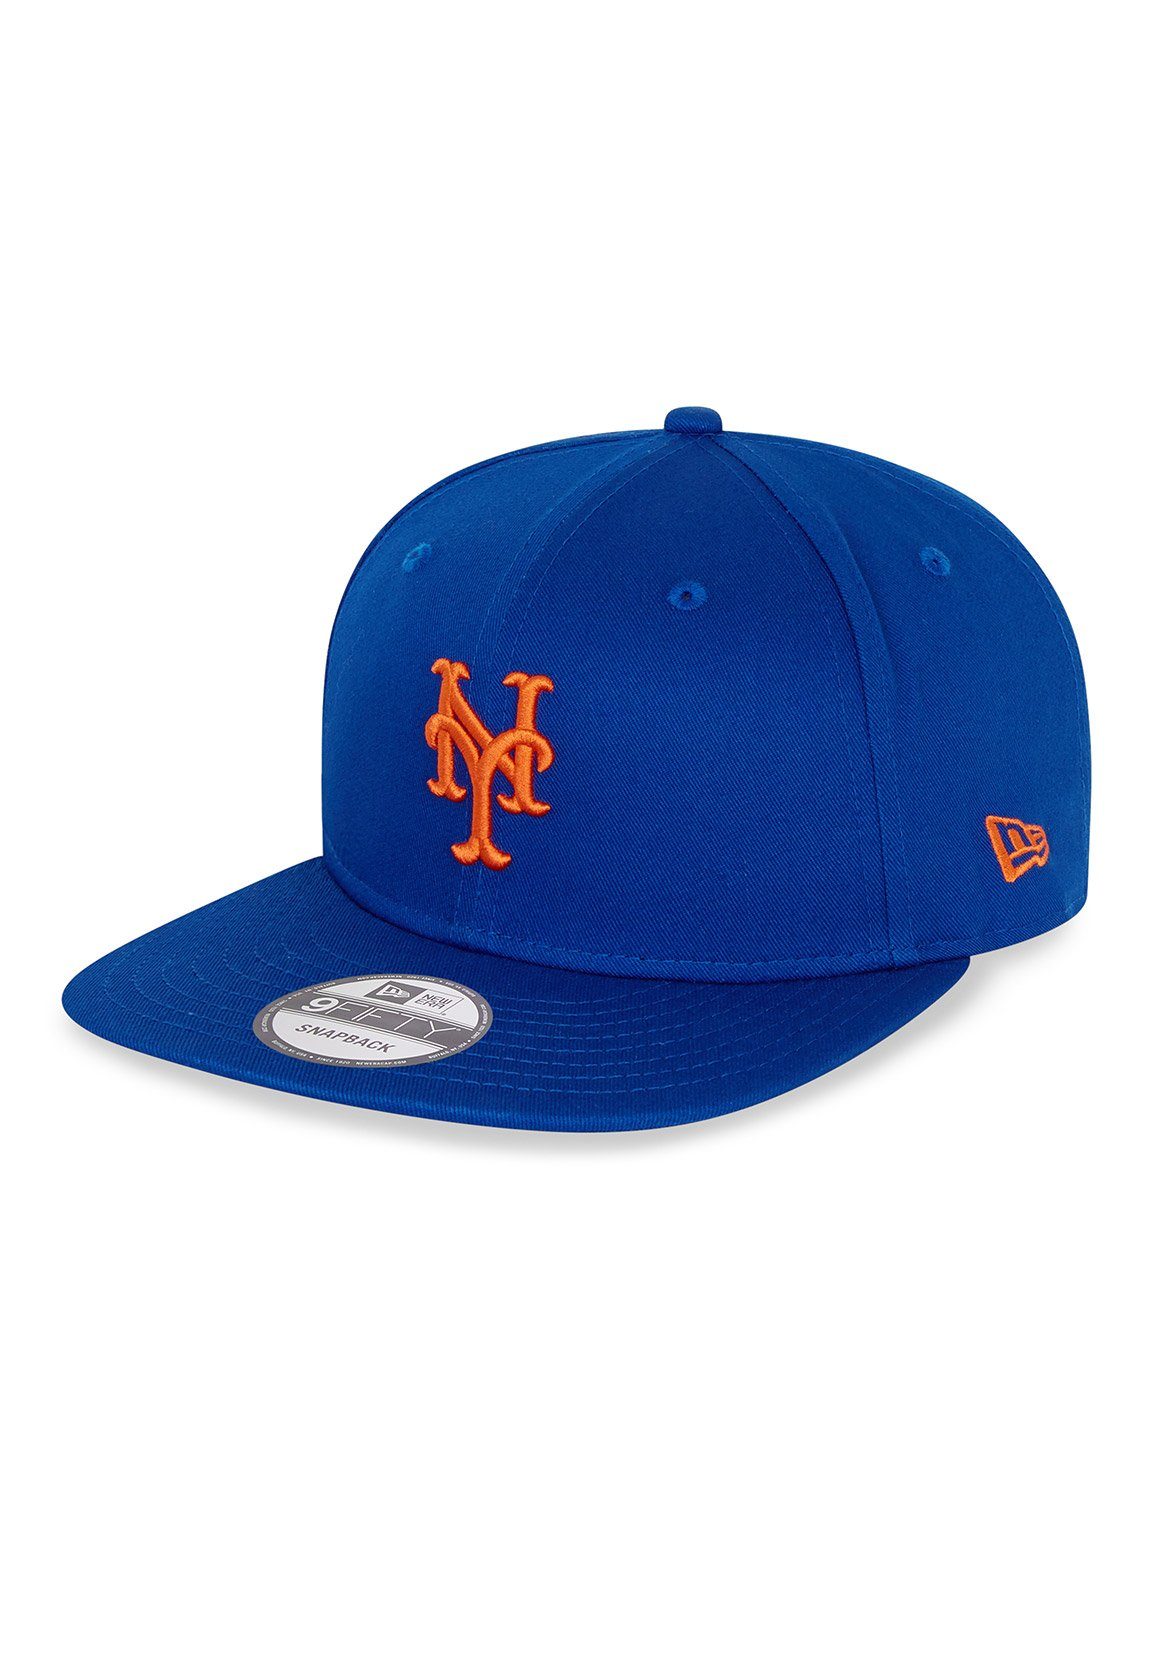 Snapback OTC Era Mets Cap 9Fifty York New Blau NOS Snapback New Era Cap New MLB